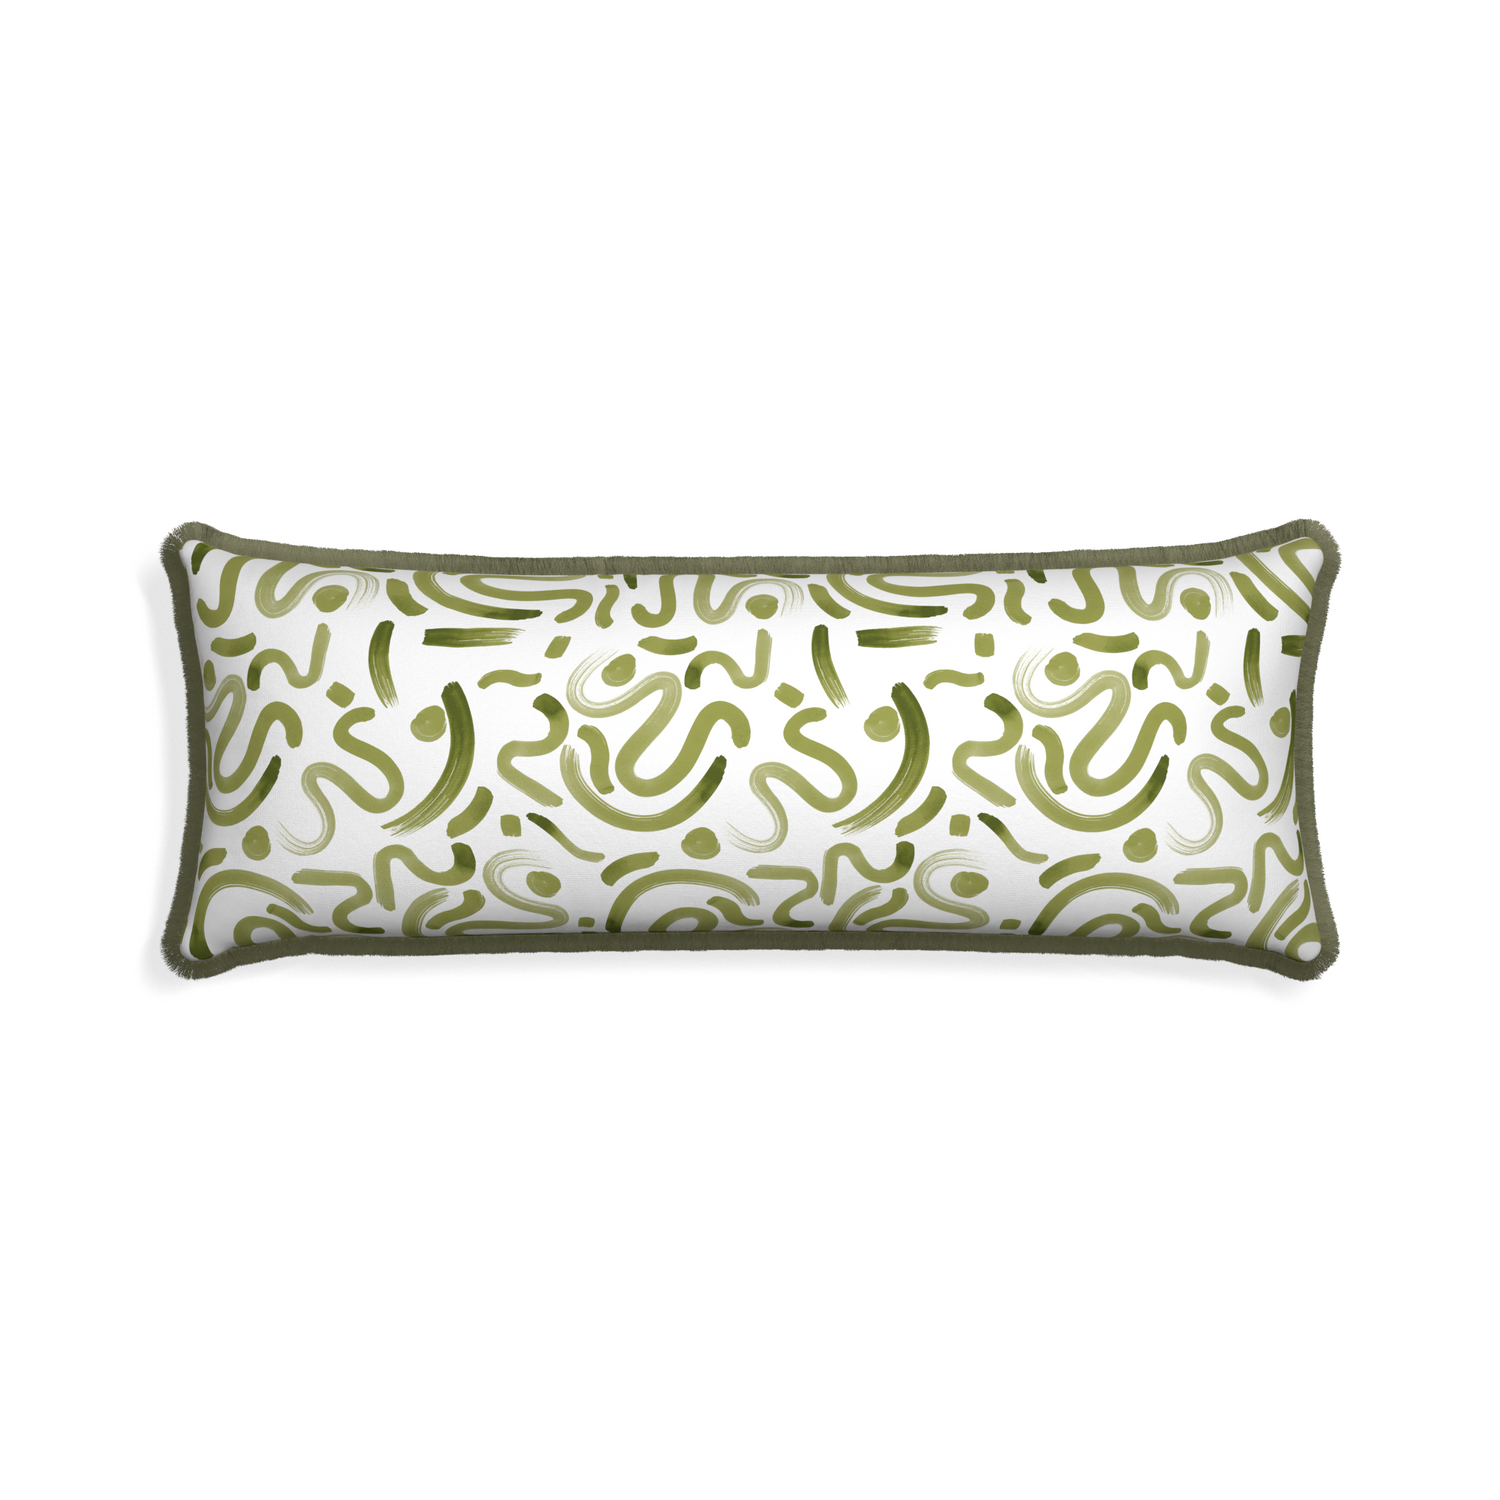 Xl-lumbar hockney moss custom pillow with sage fringe on white background